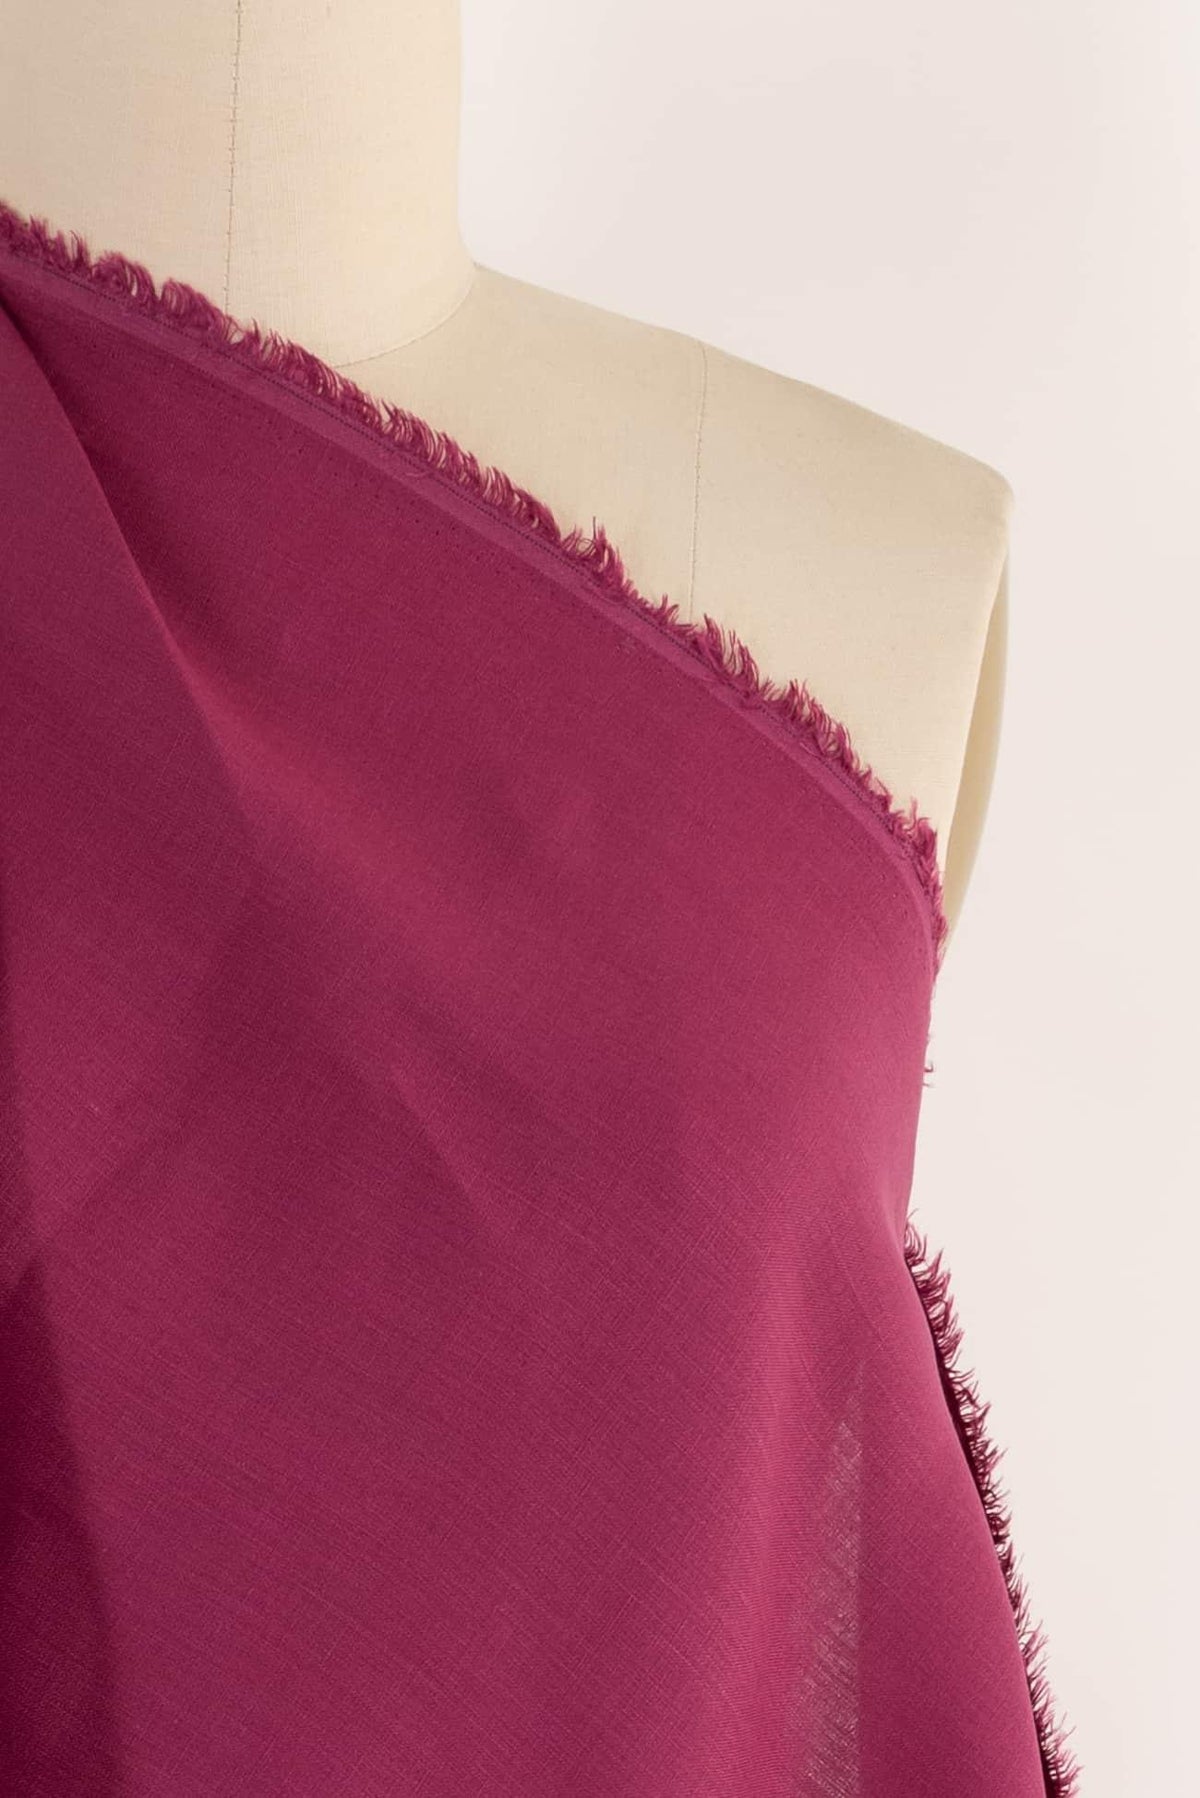 Rouge Linen Woven - Marcy Tilton Fabrics